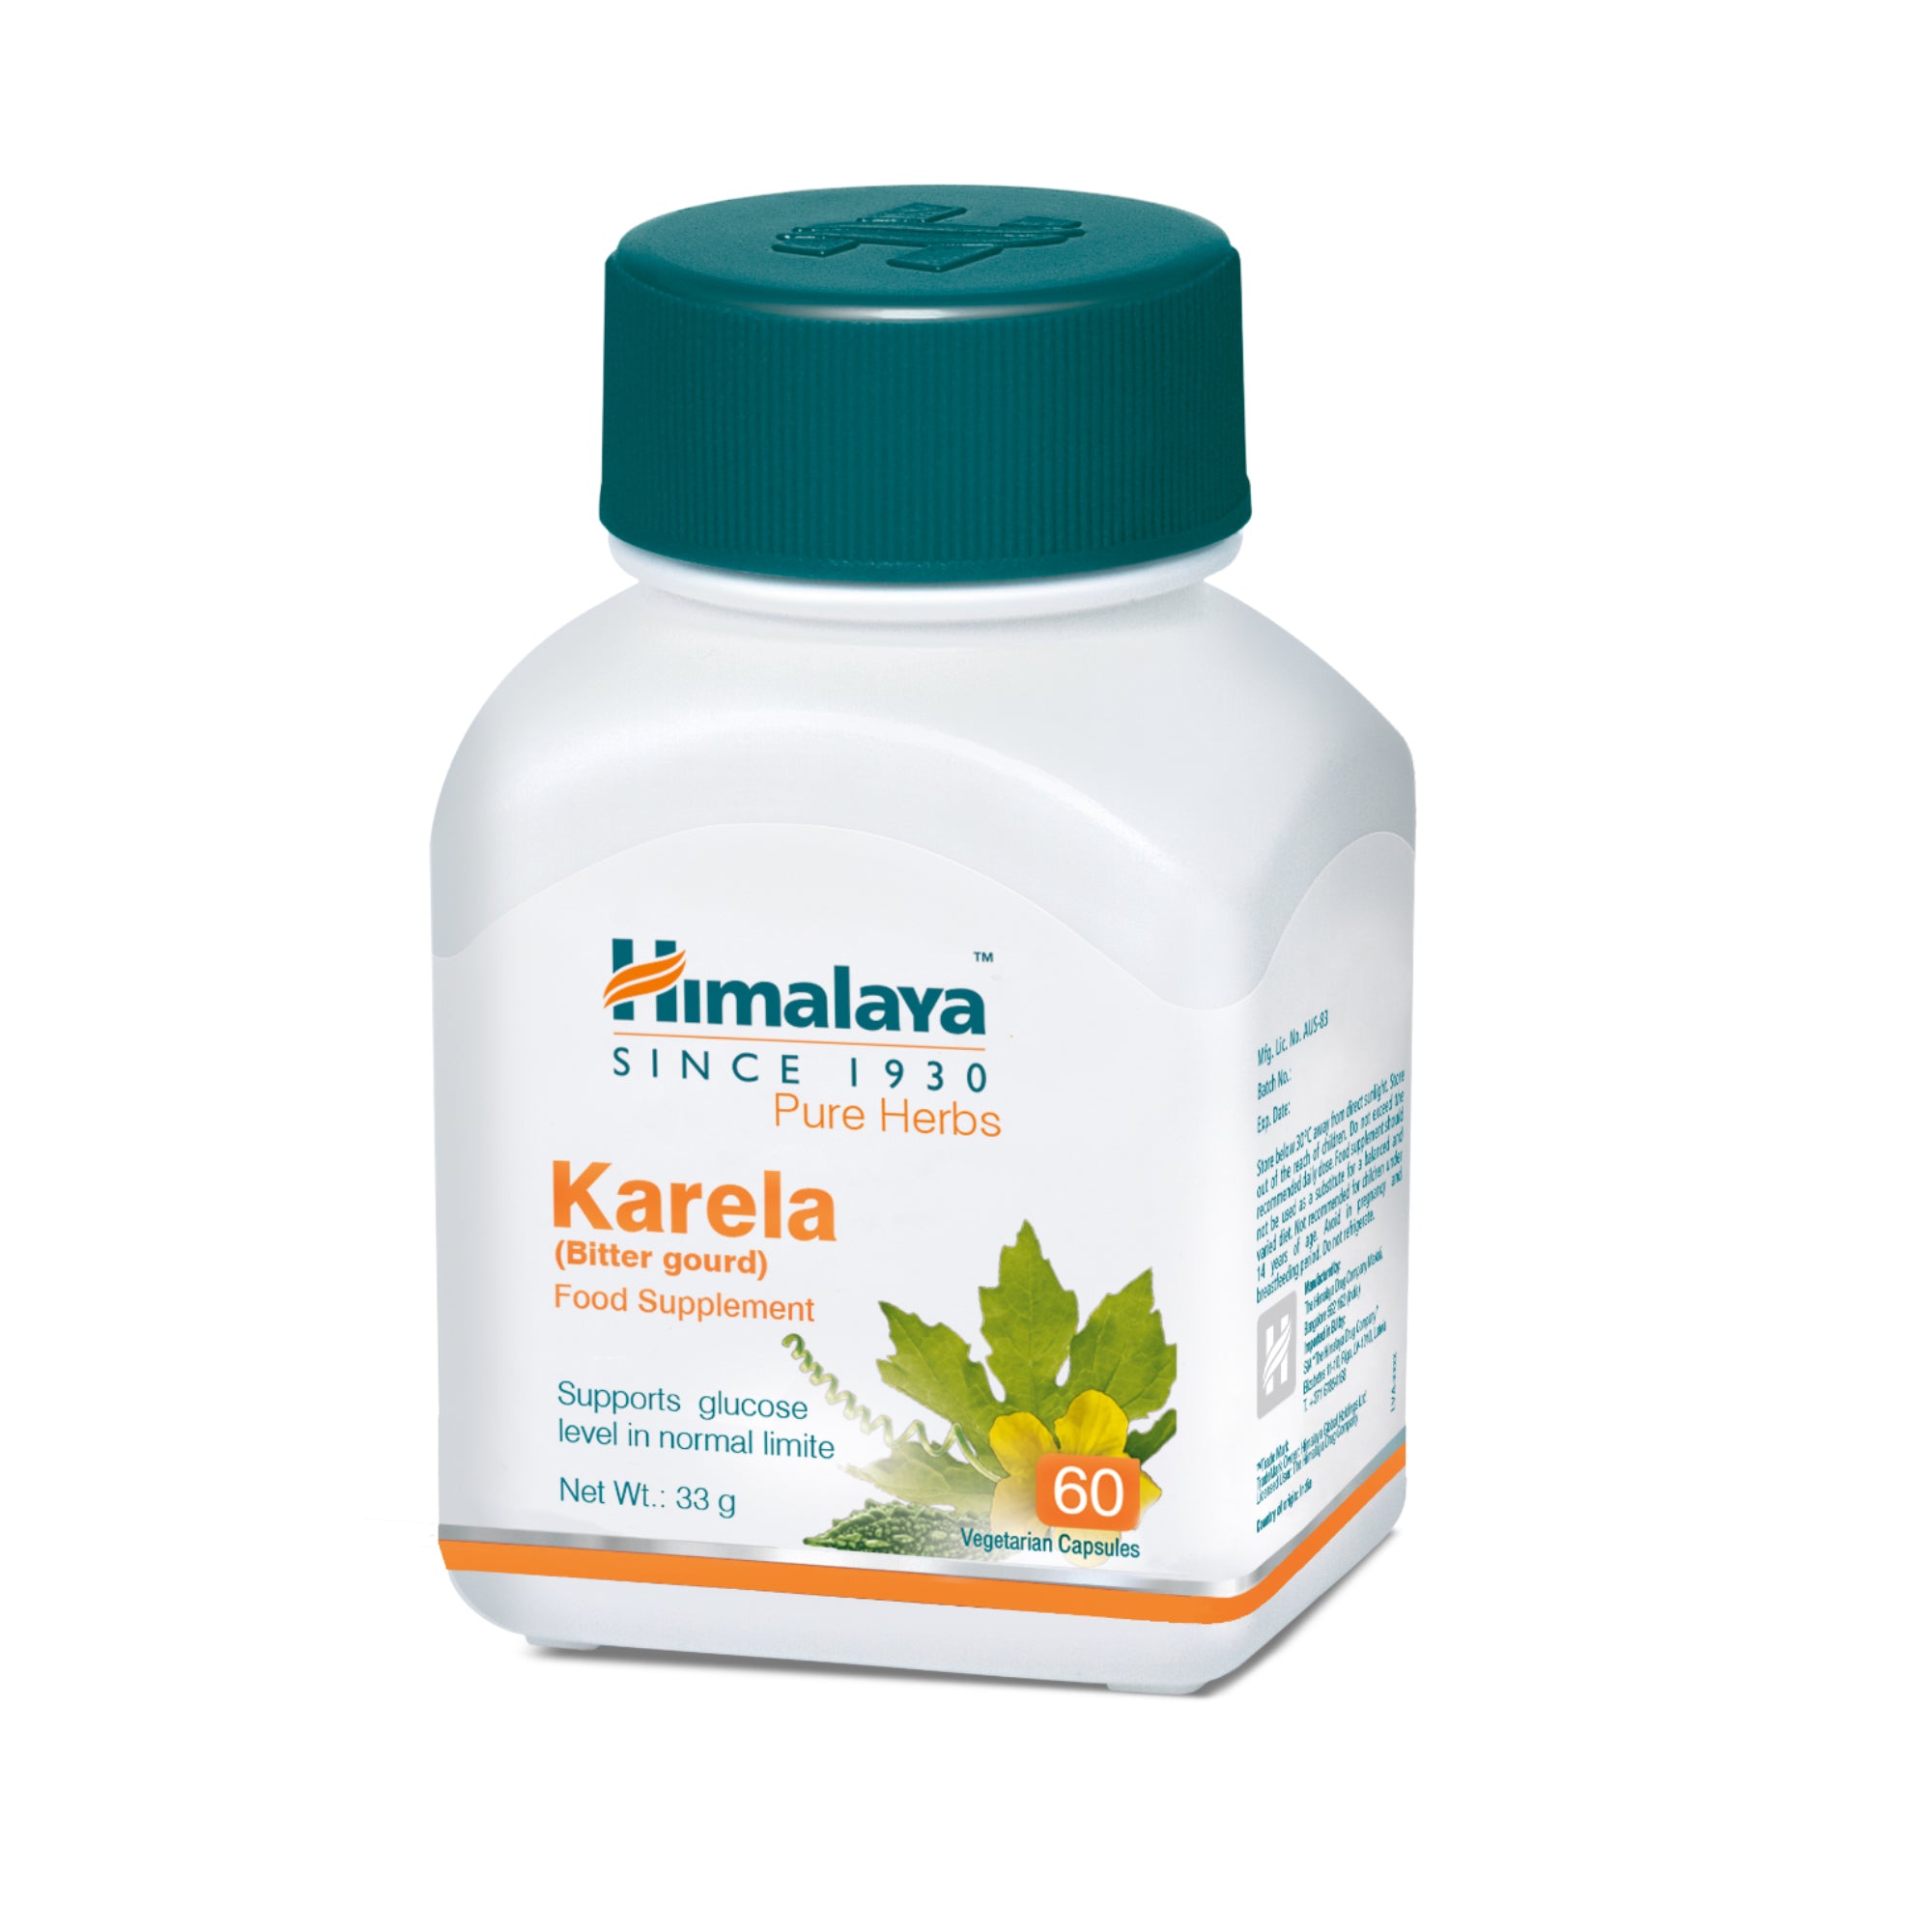 Himalaya Karela - Regulates Glucose Levels